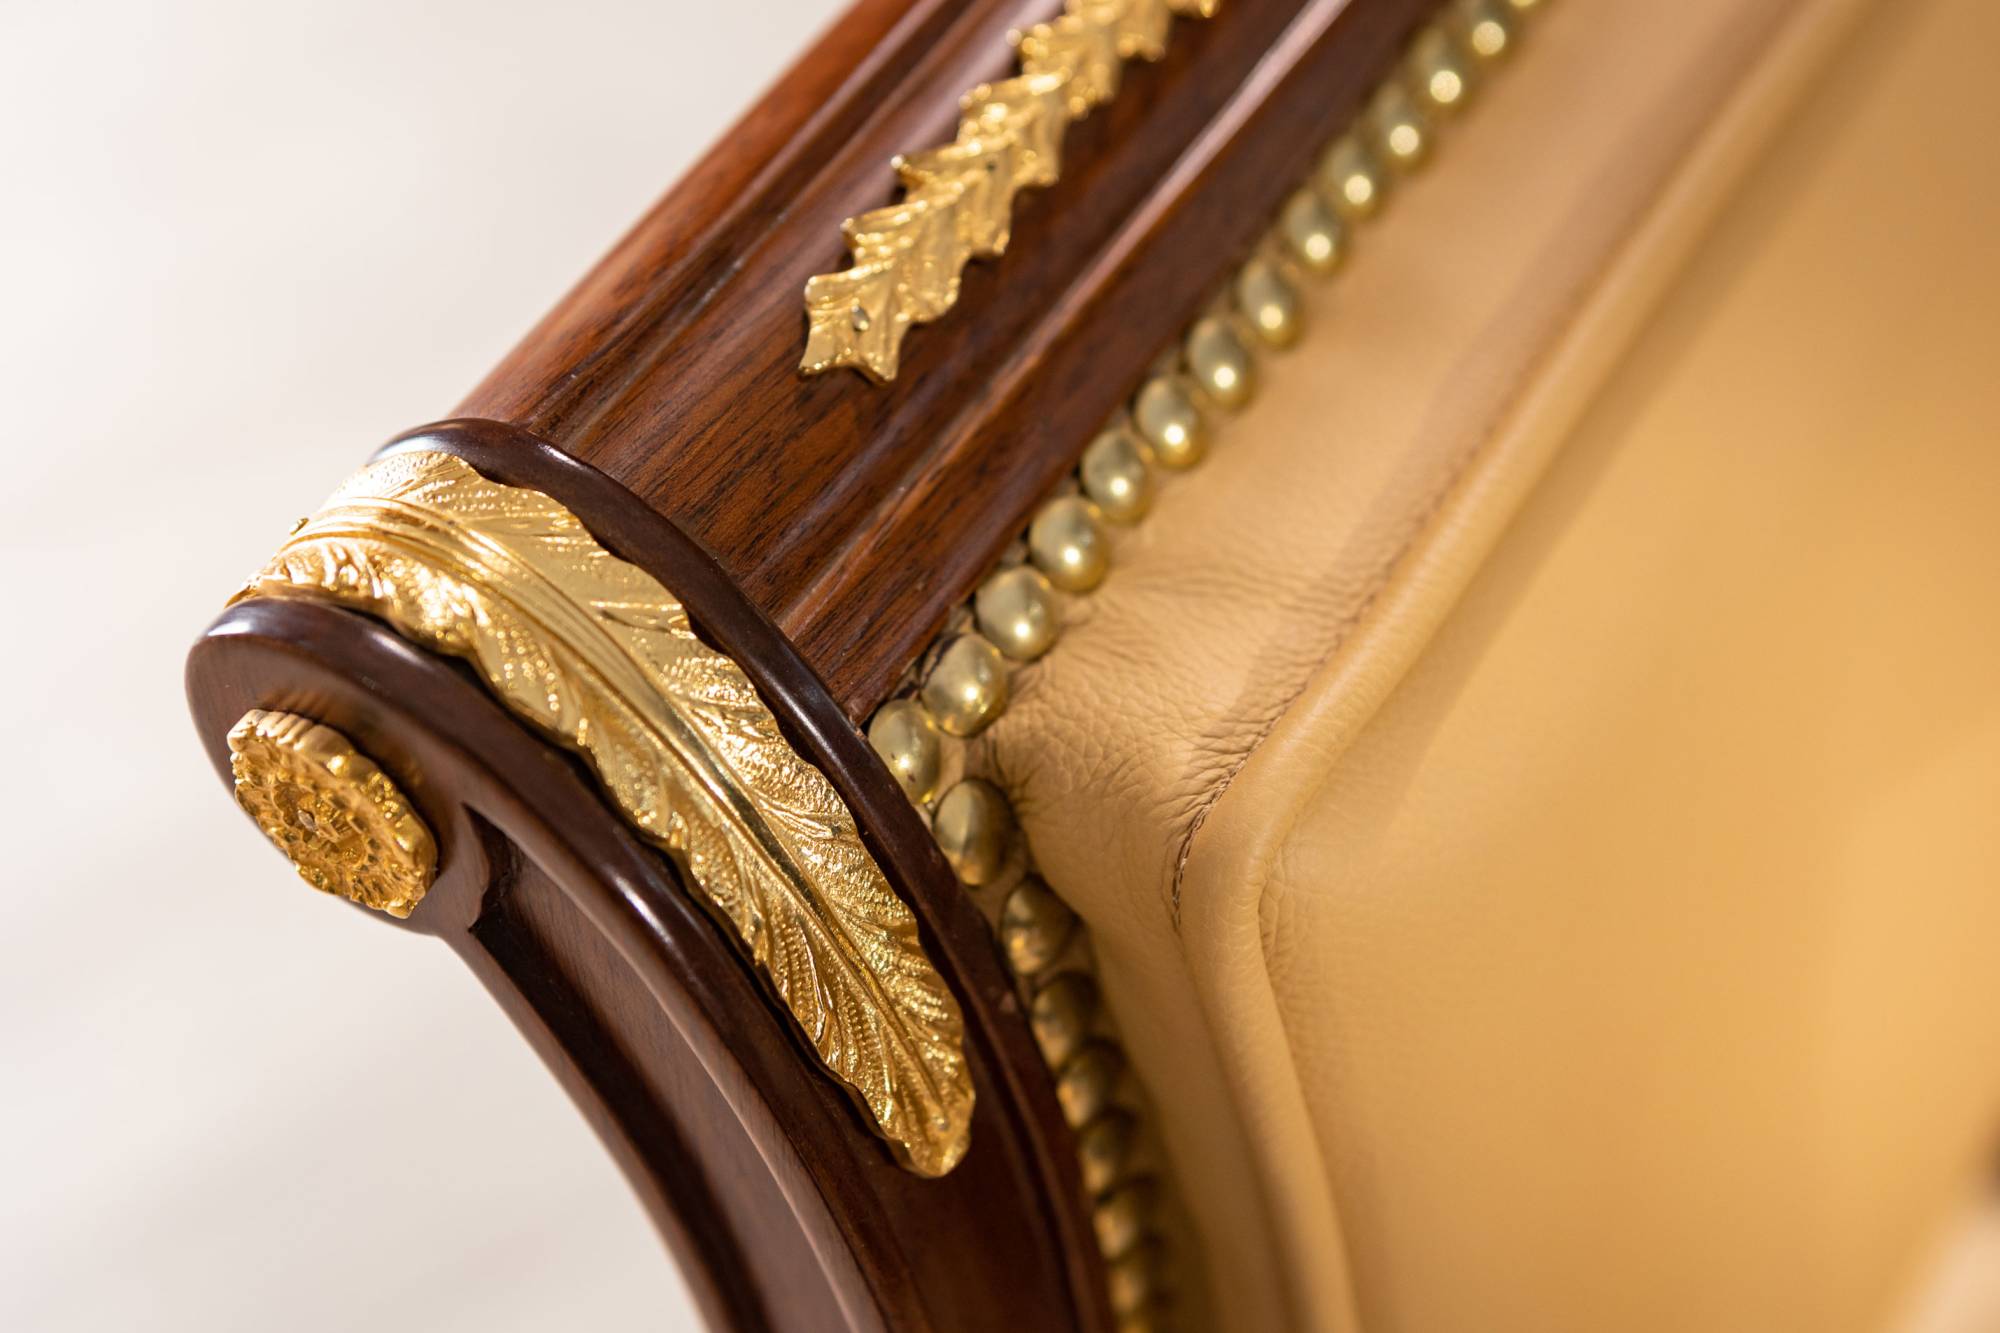 ART. 781 – C.G. Capelletti Italian Luxury Classic Chairs. Made in Italy classic interior design